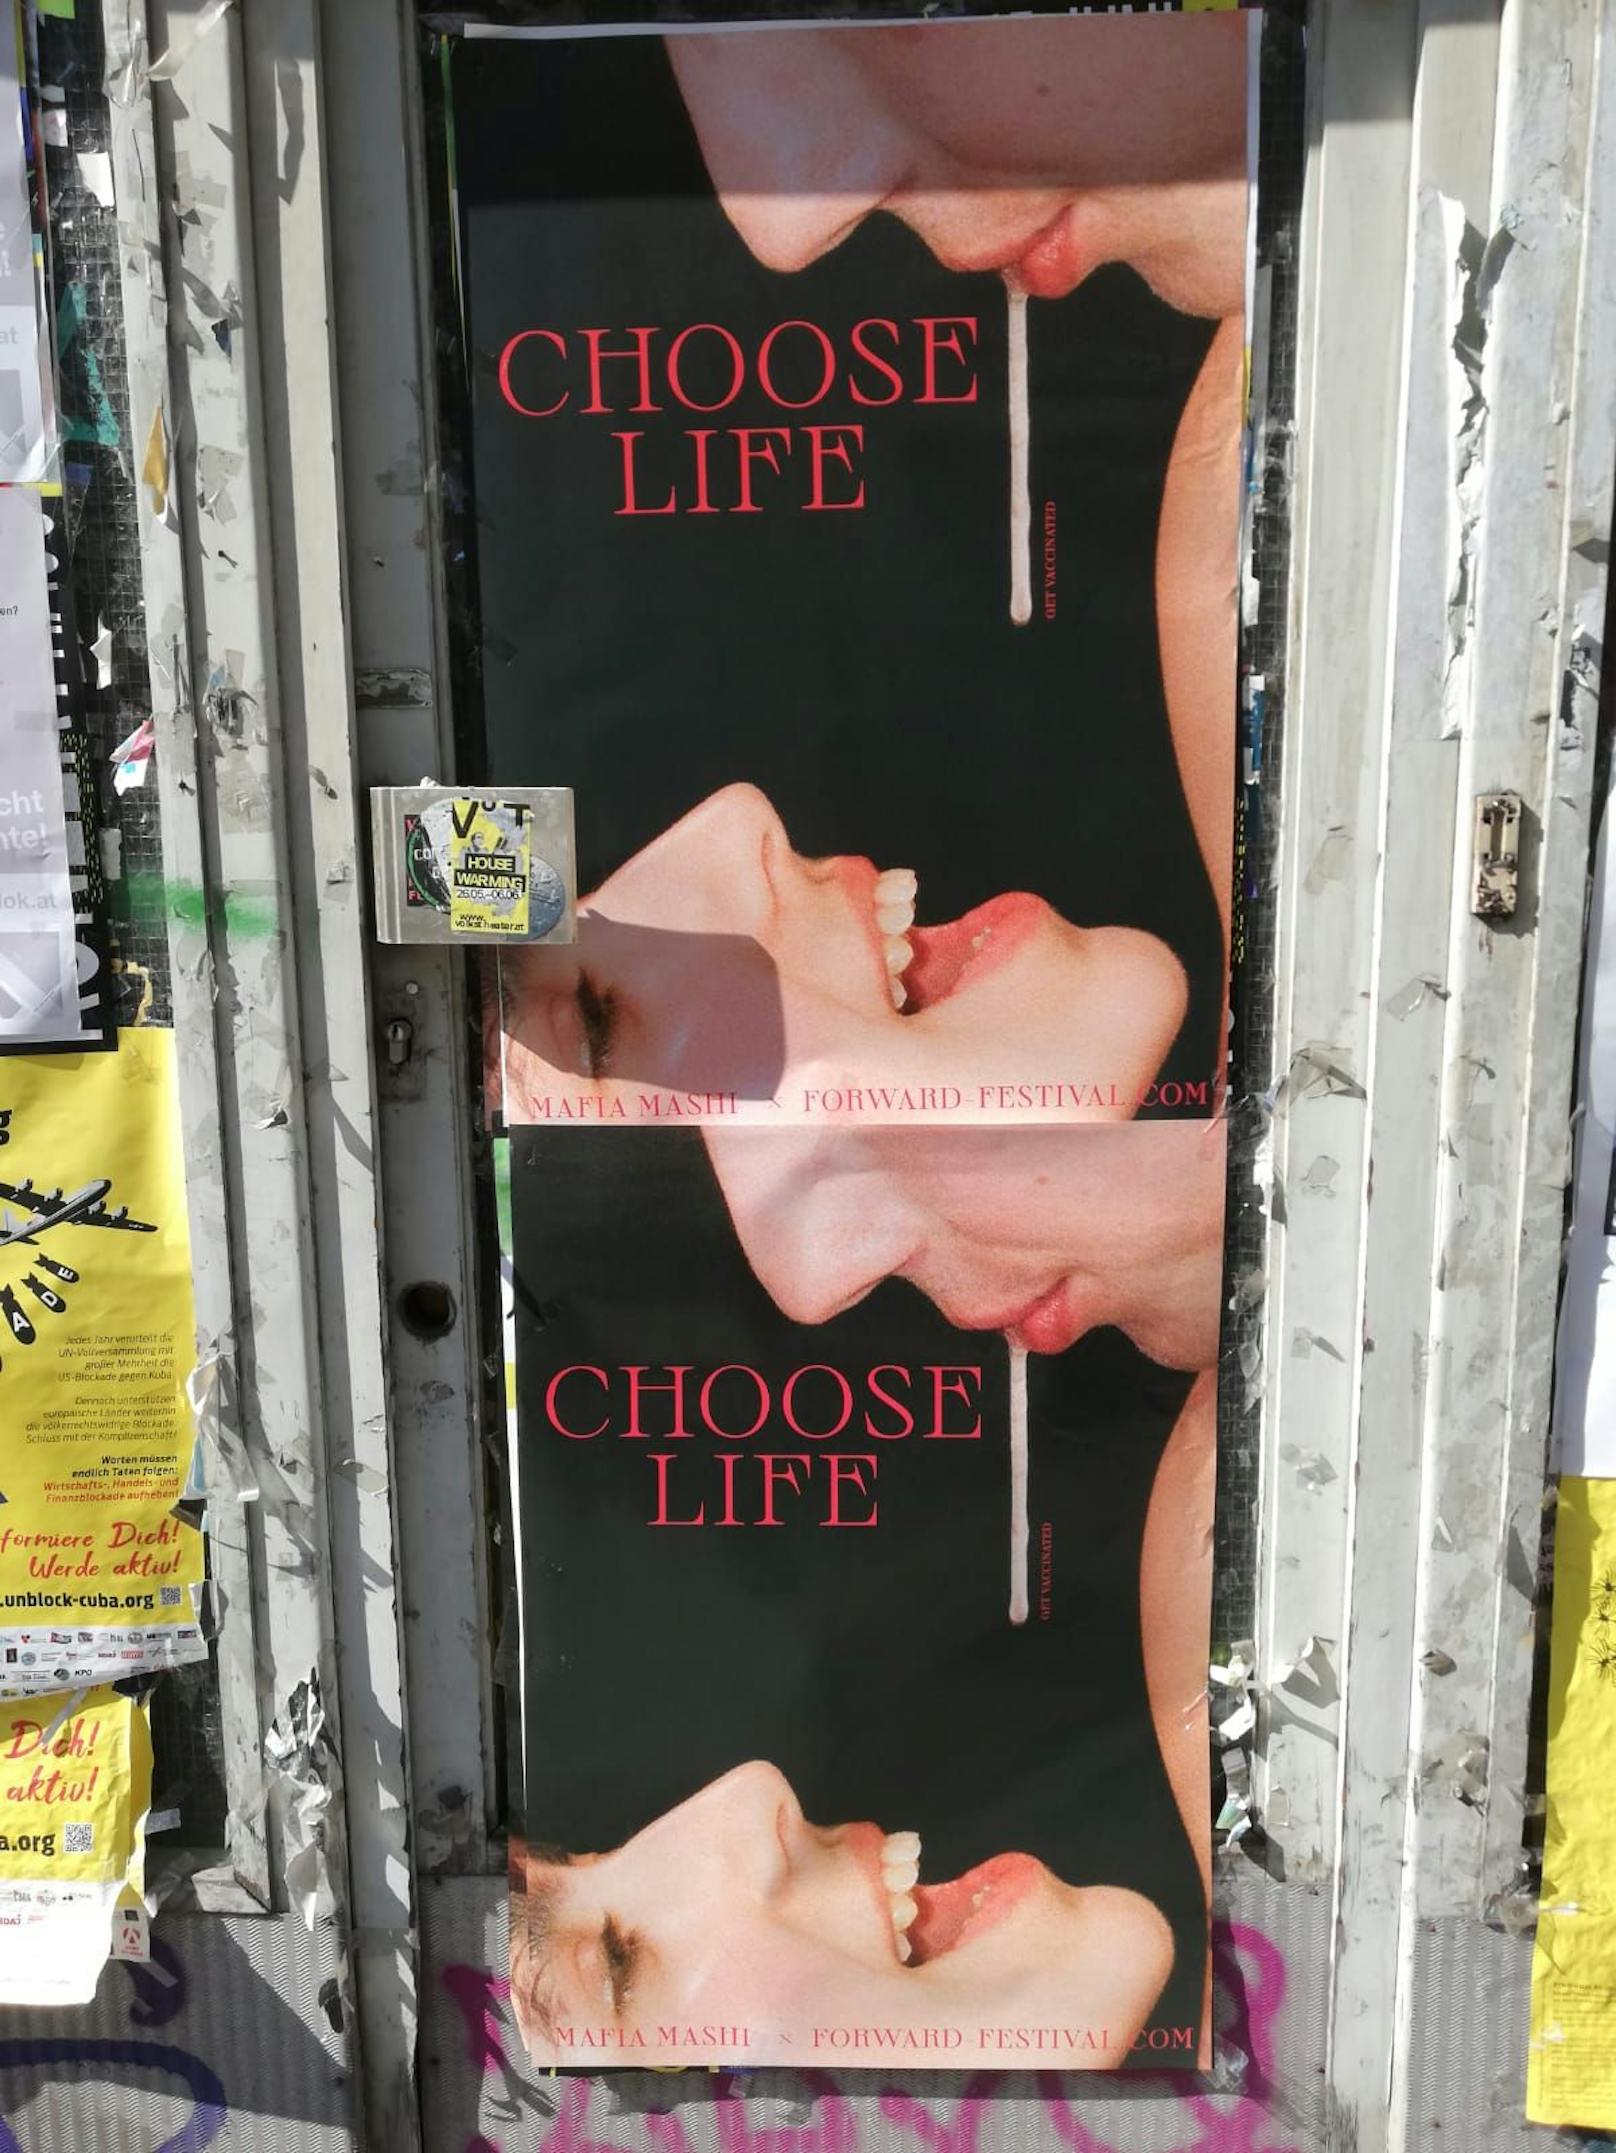 Plakate der Impfkampagne "Choose Life (get vaccinated) in Wien